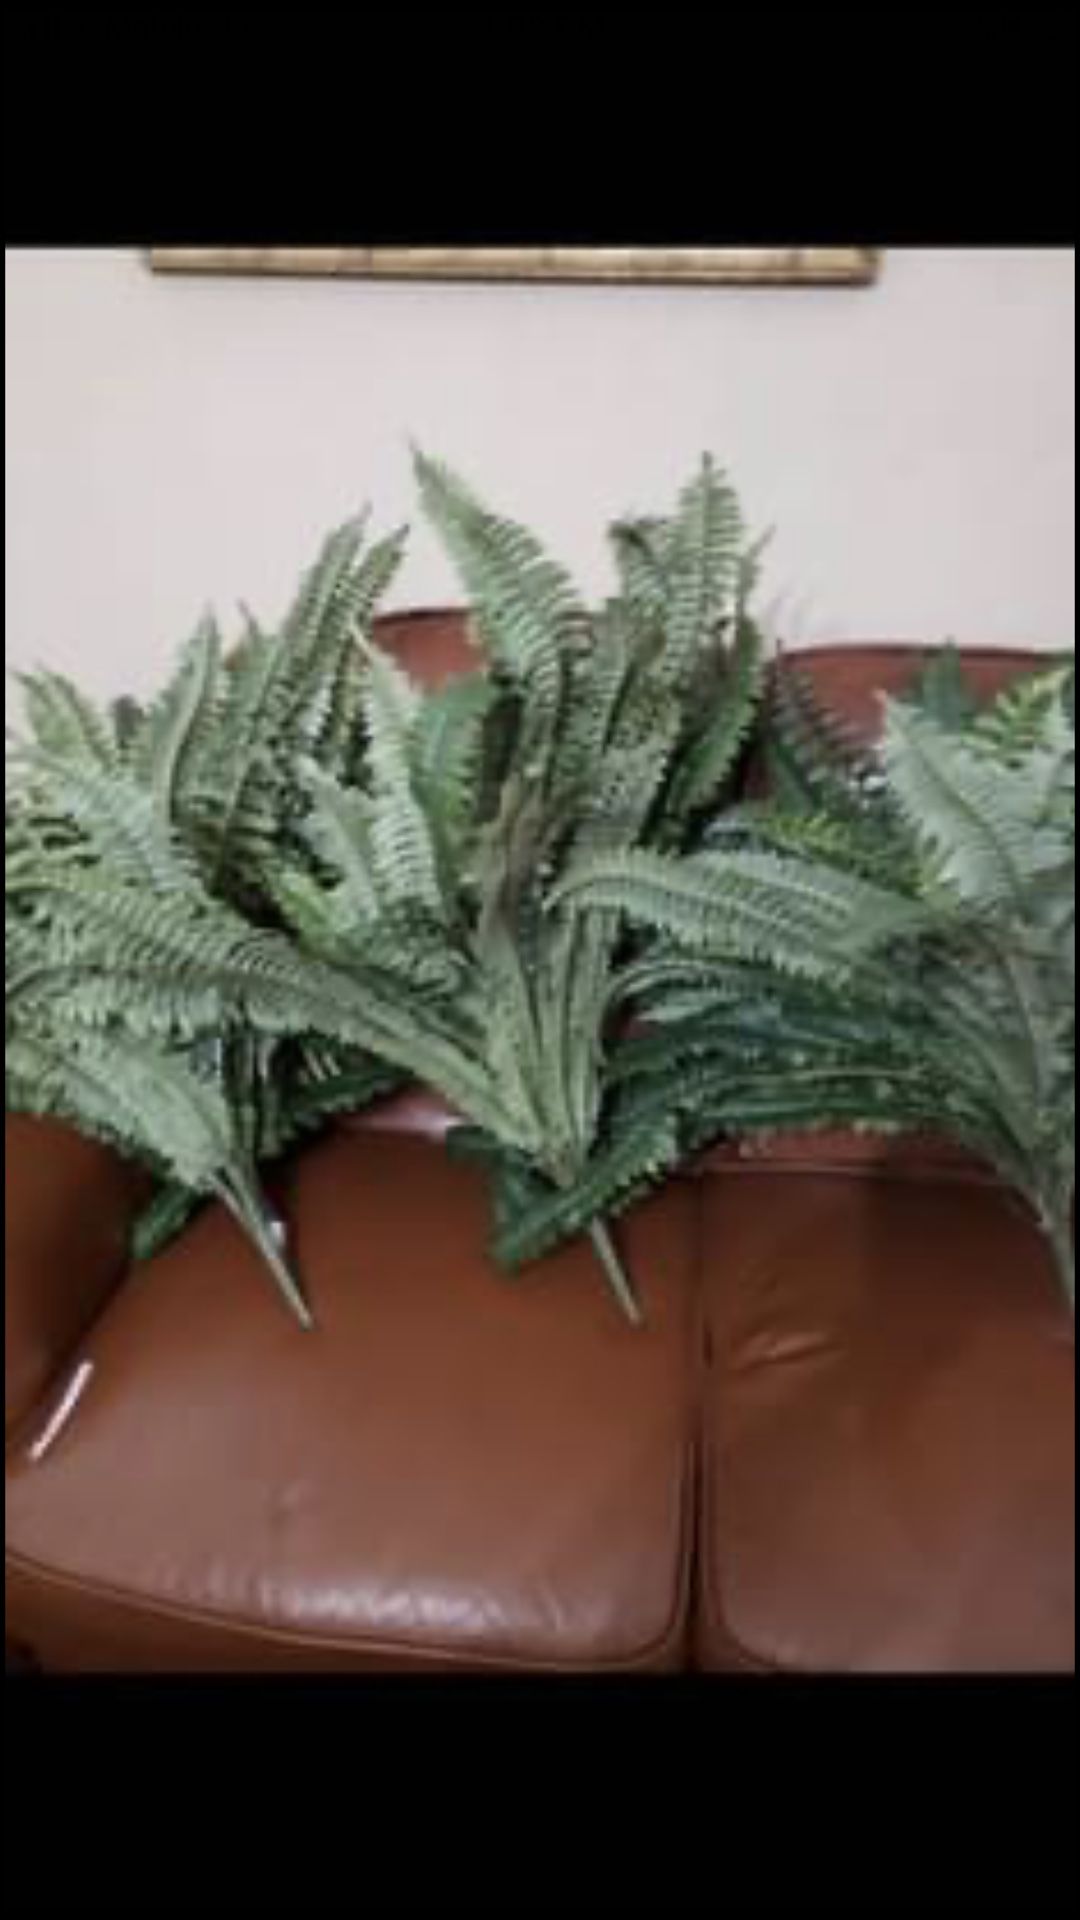 3 fake decor ferns . Brand new . Smoke free home